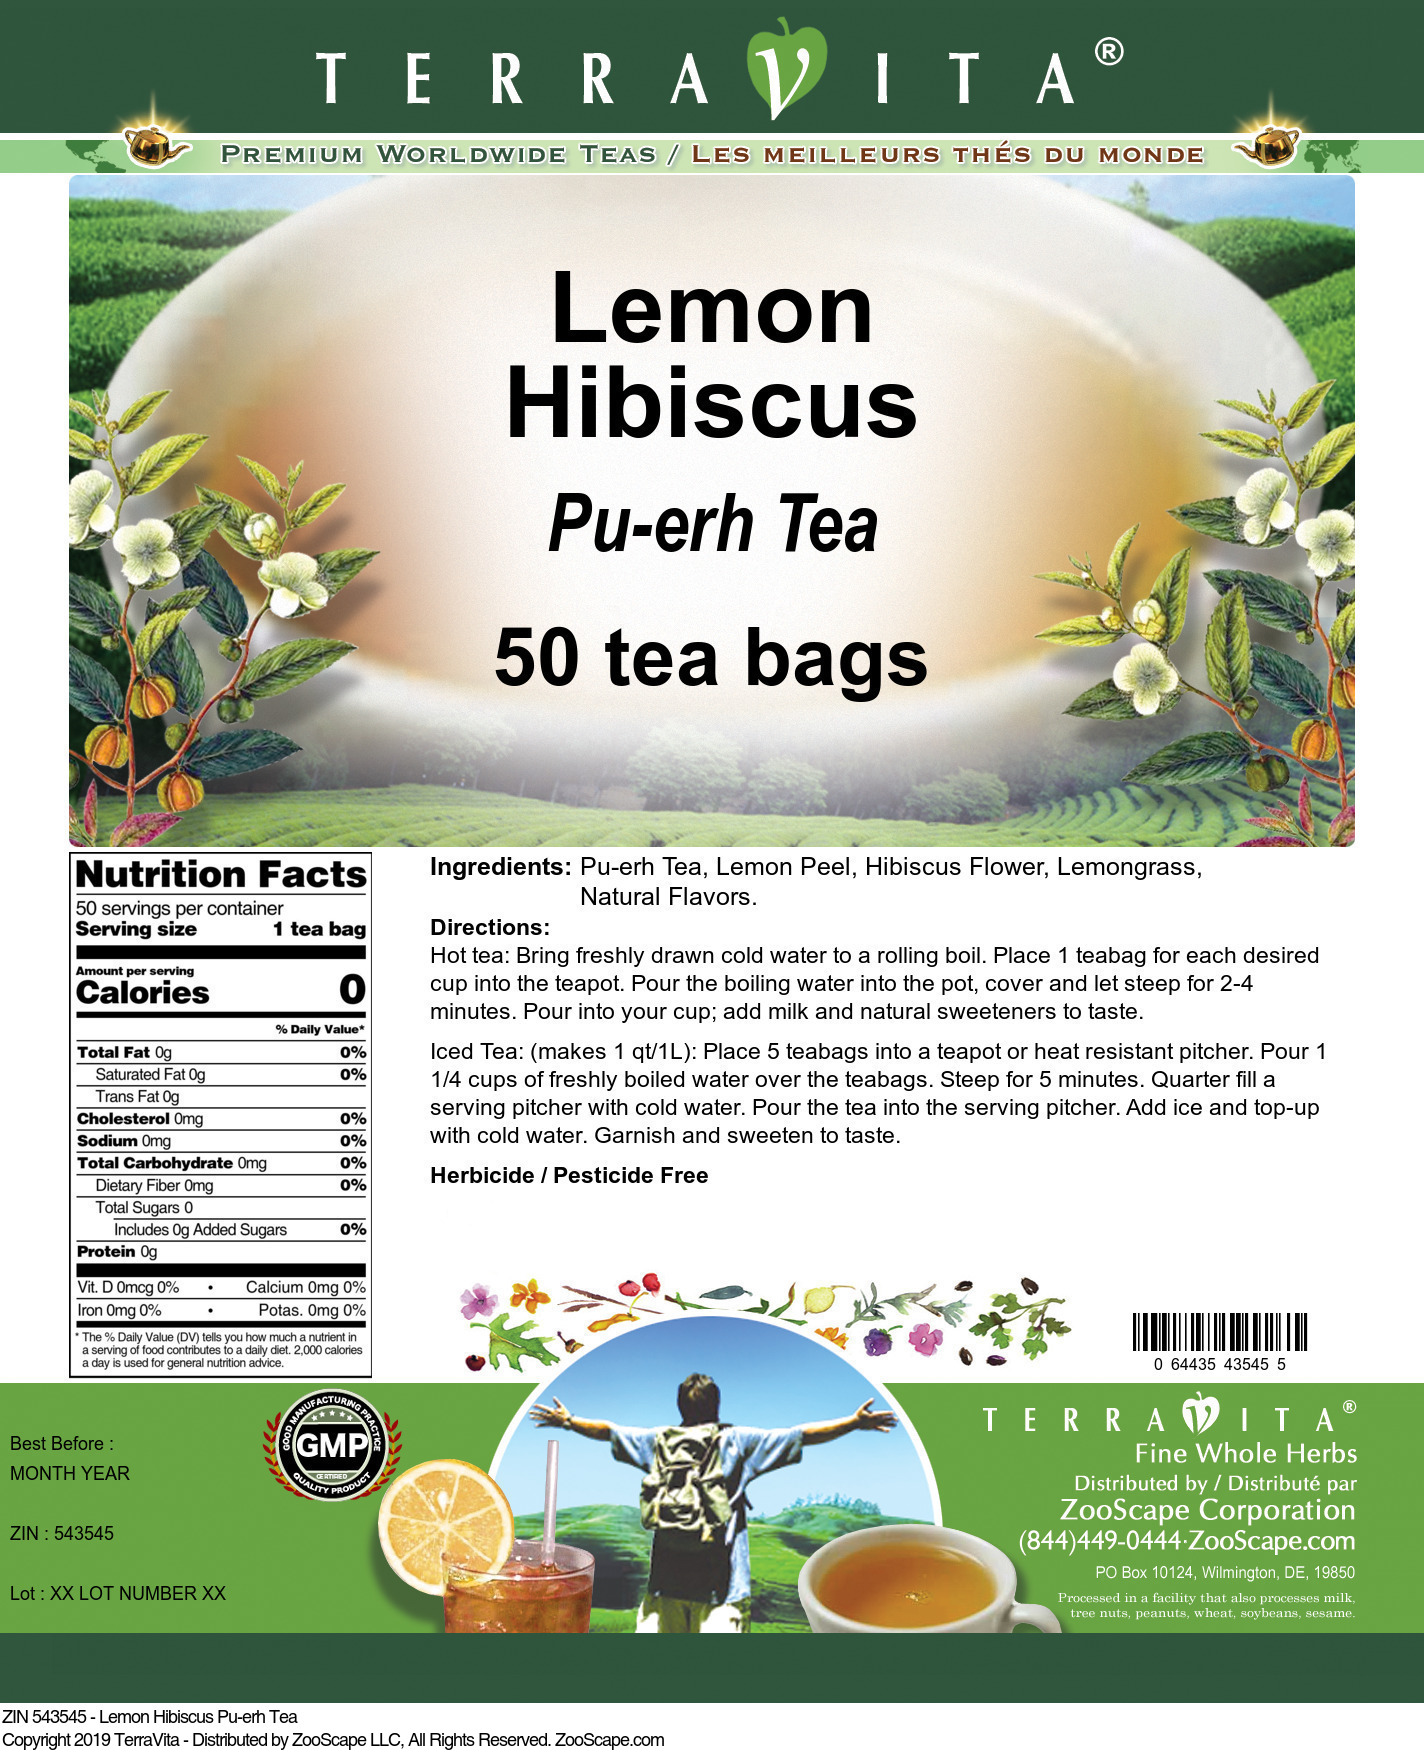 Lemon Hibiscus Pu-erh Tea - Label